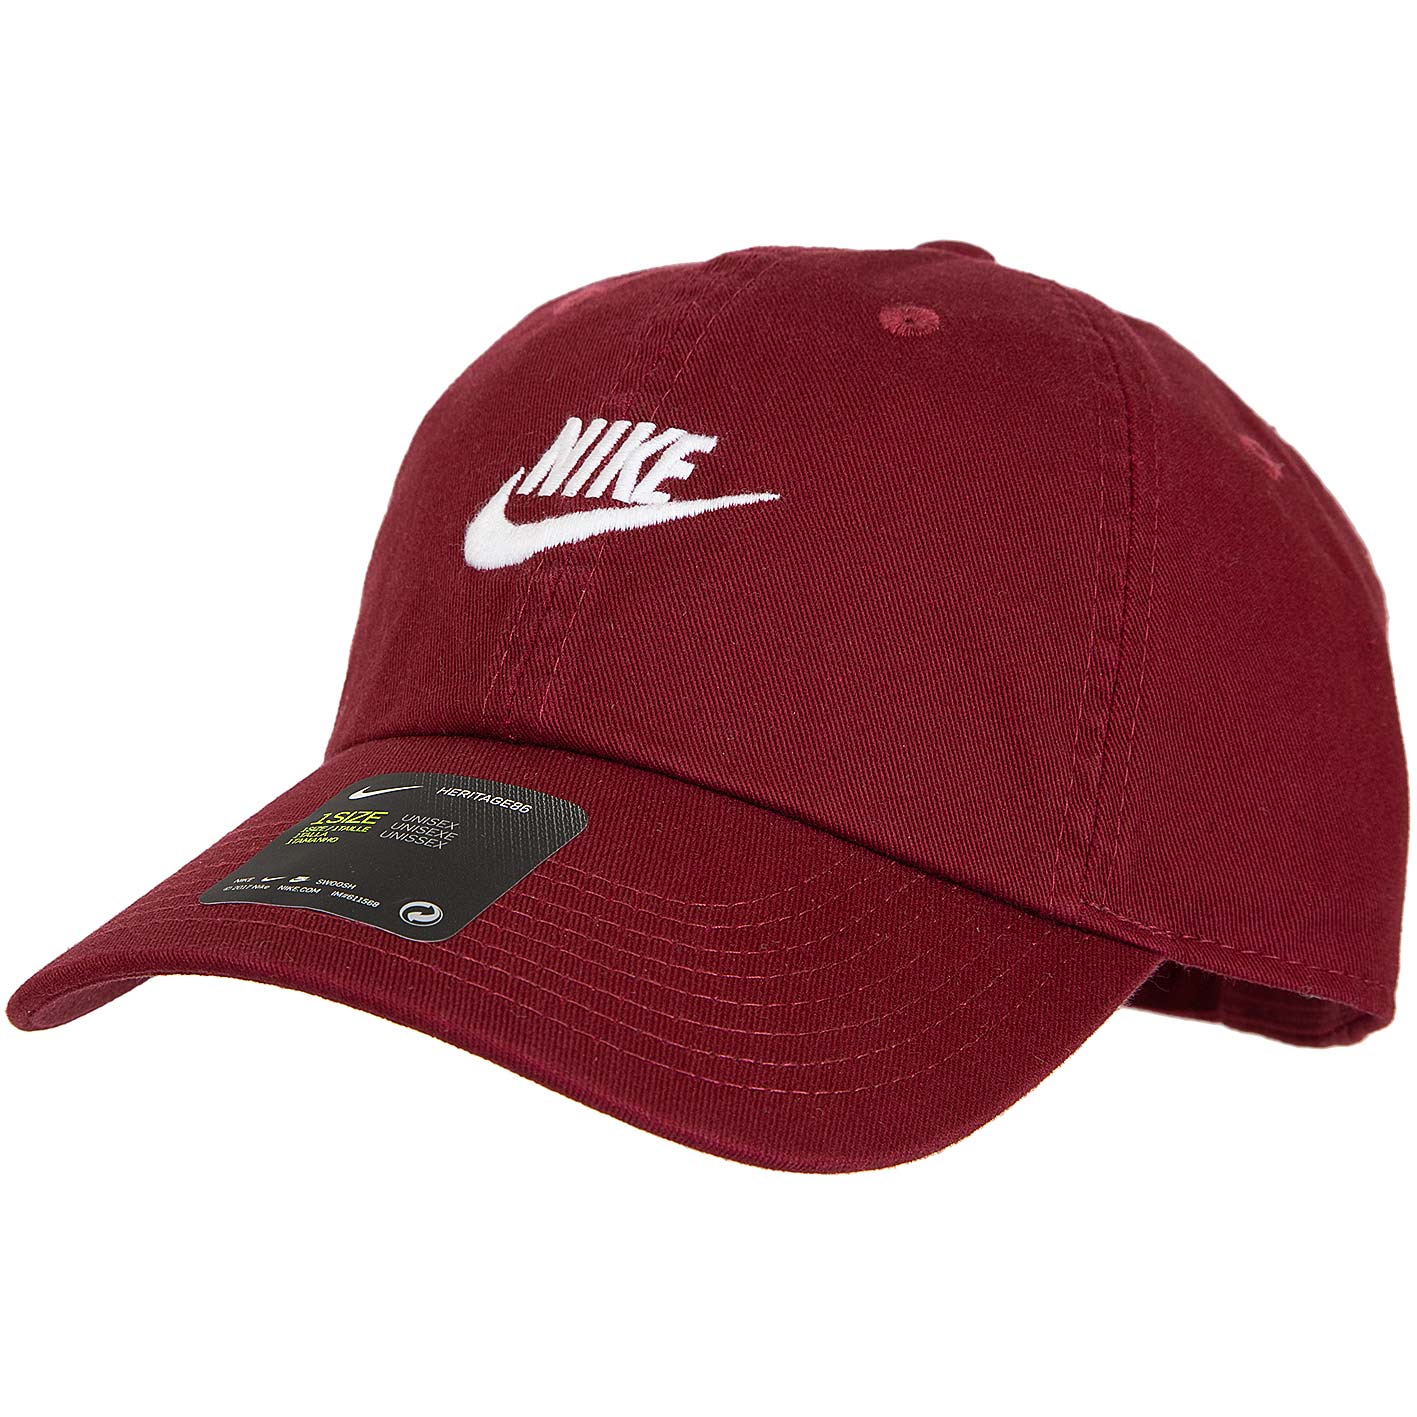 ☆ Nike Snapback Cap H86 Futura Washed rot/weiß - hier bestellen!